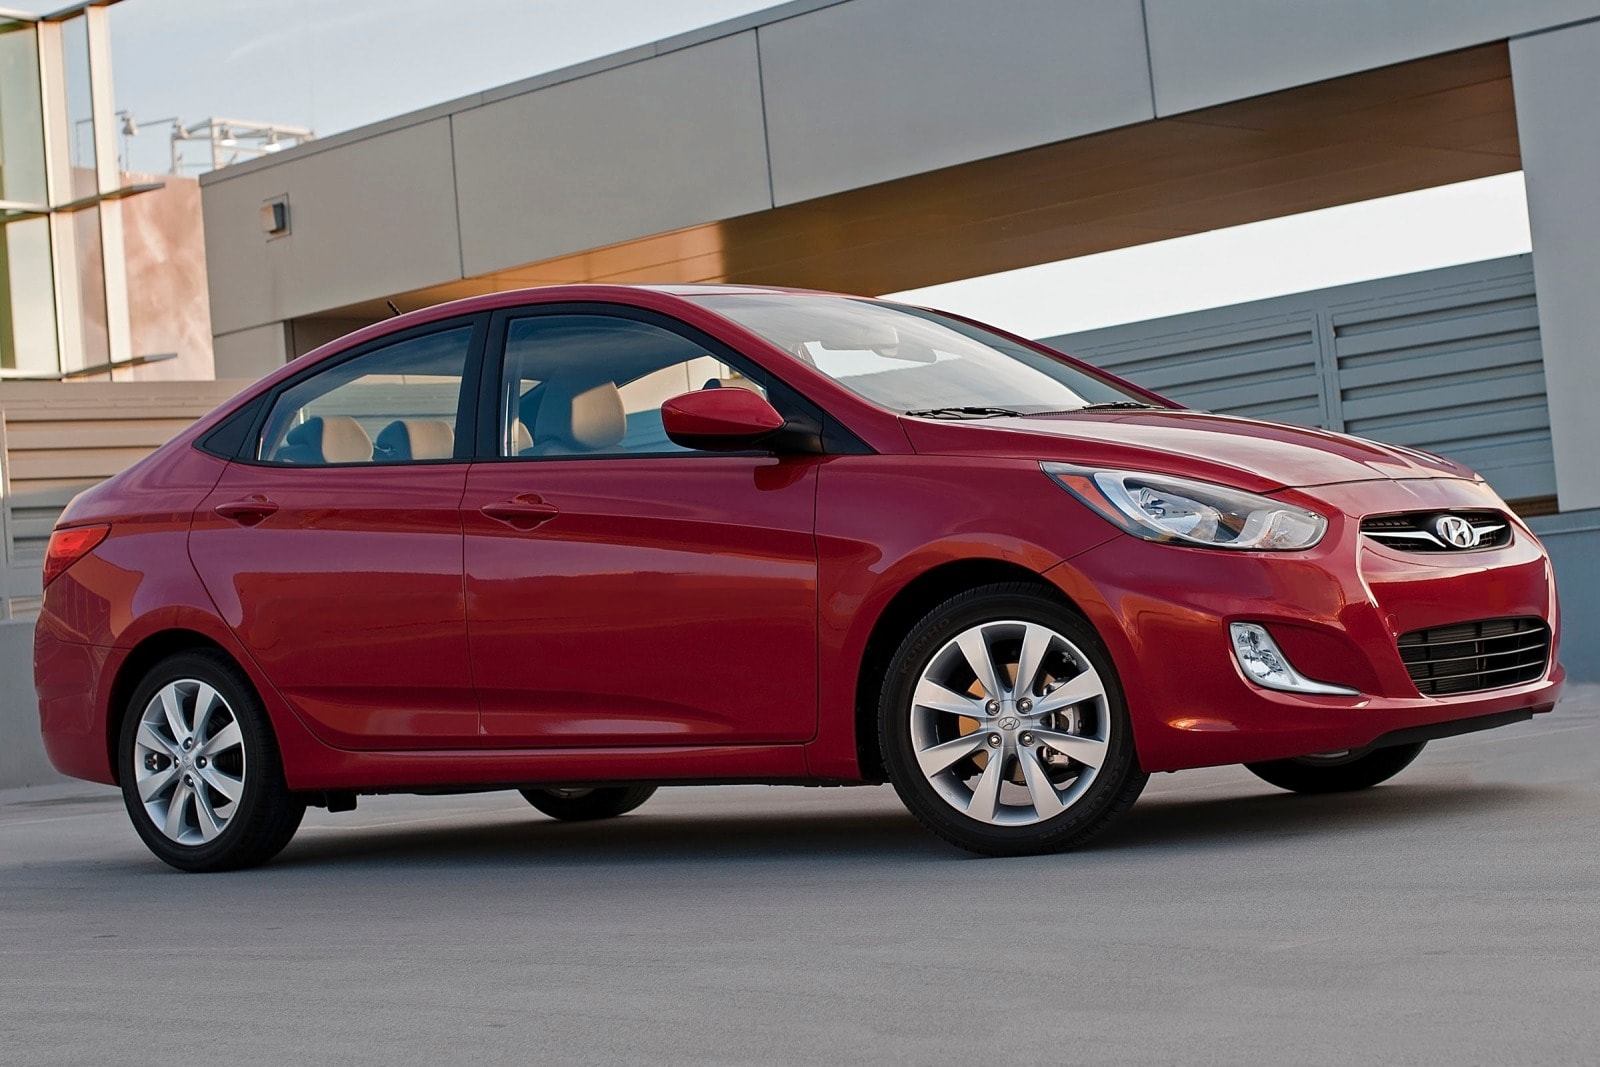 Used 2014 Hyundai Accent Sedan Review | Edmunds